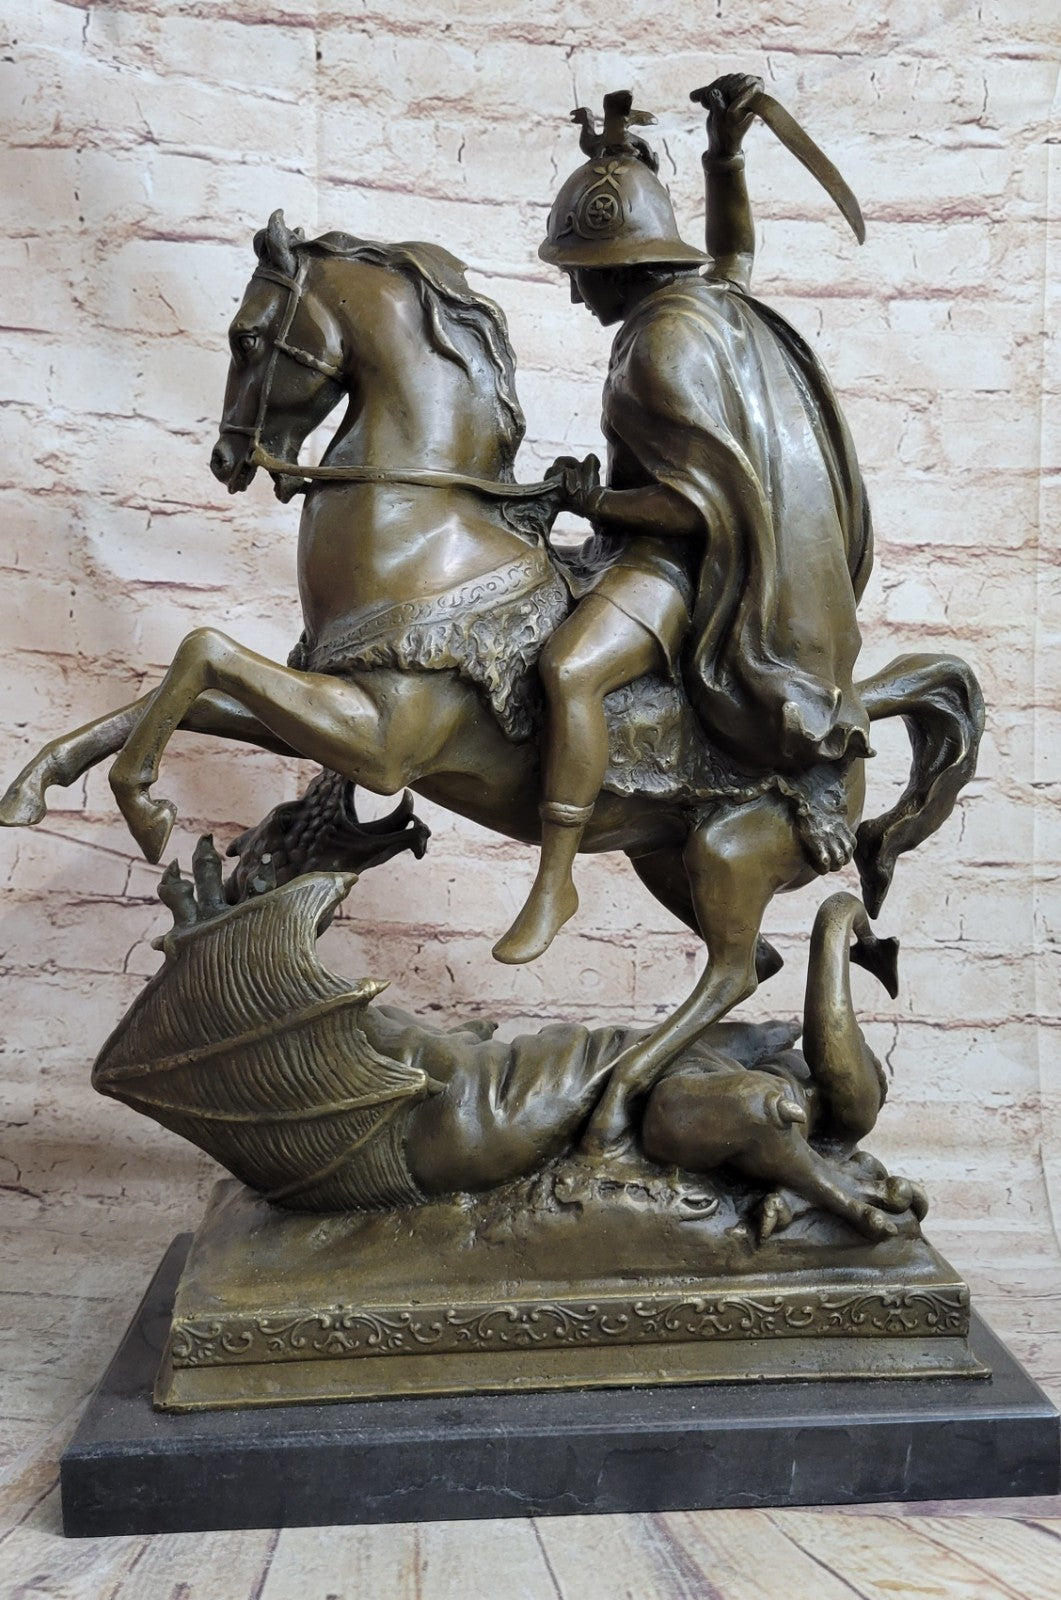 Signed Saint George killing Dragon Bronze Sculpture Art Statue Figurine Figure